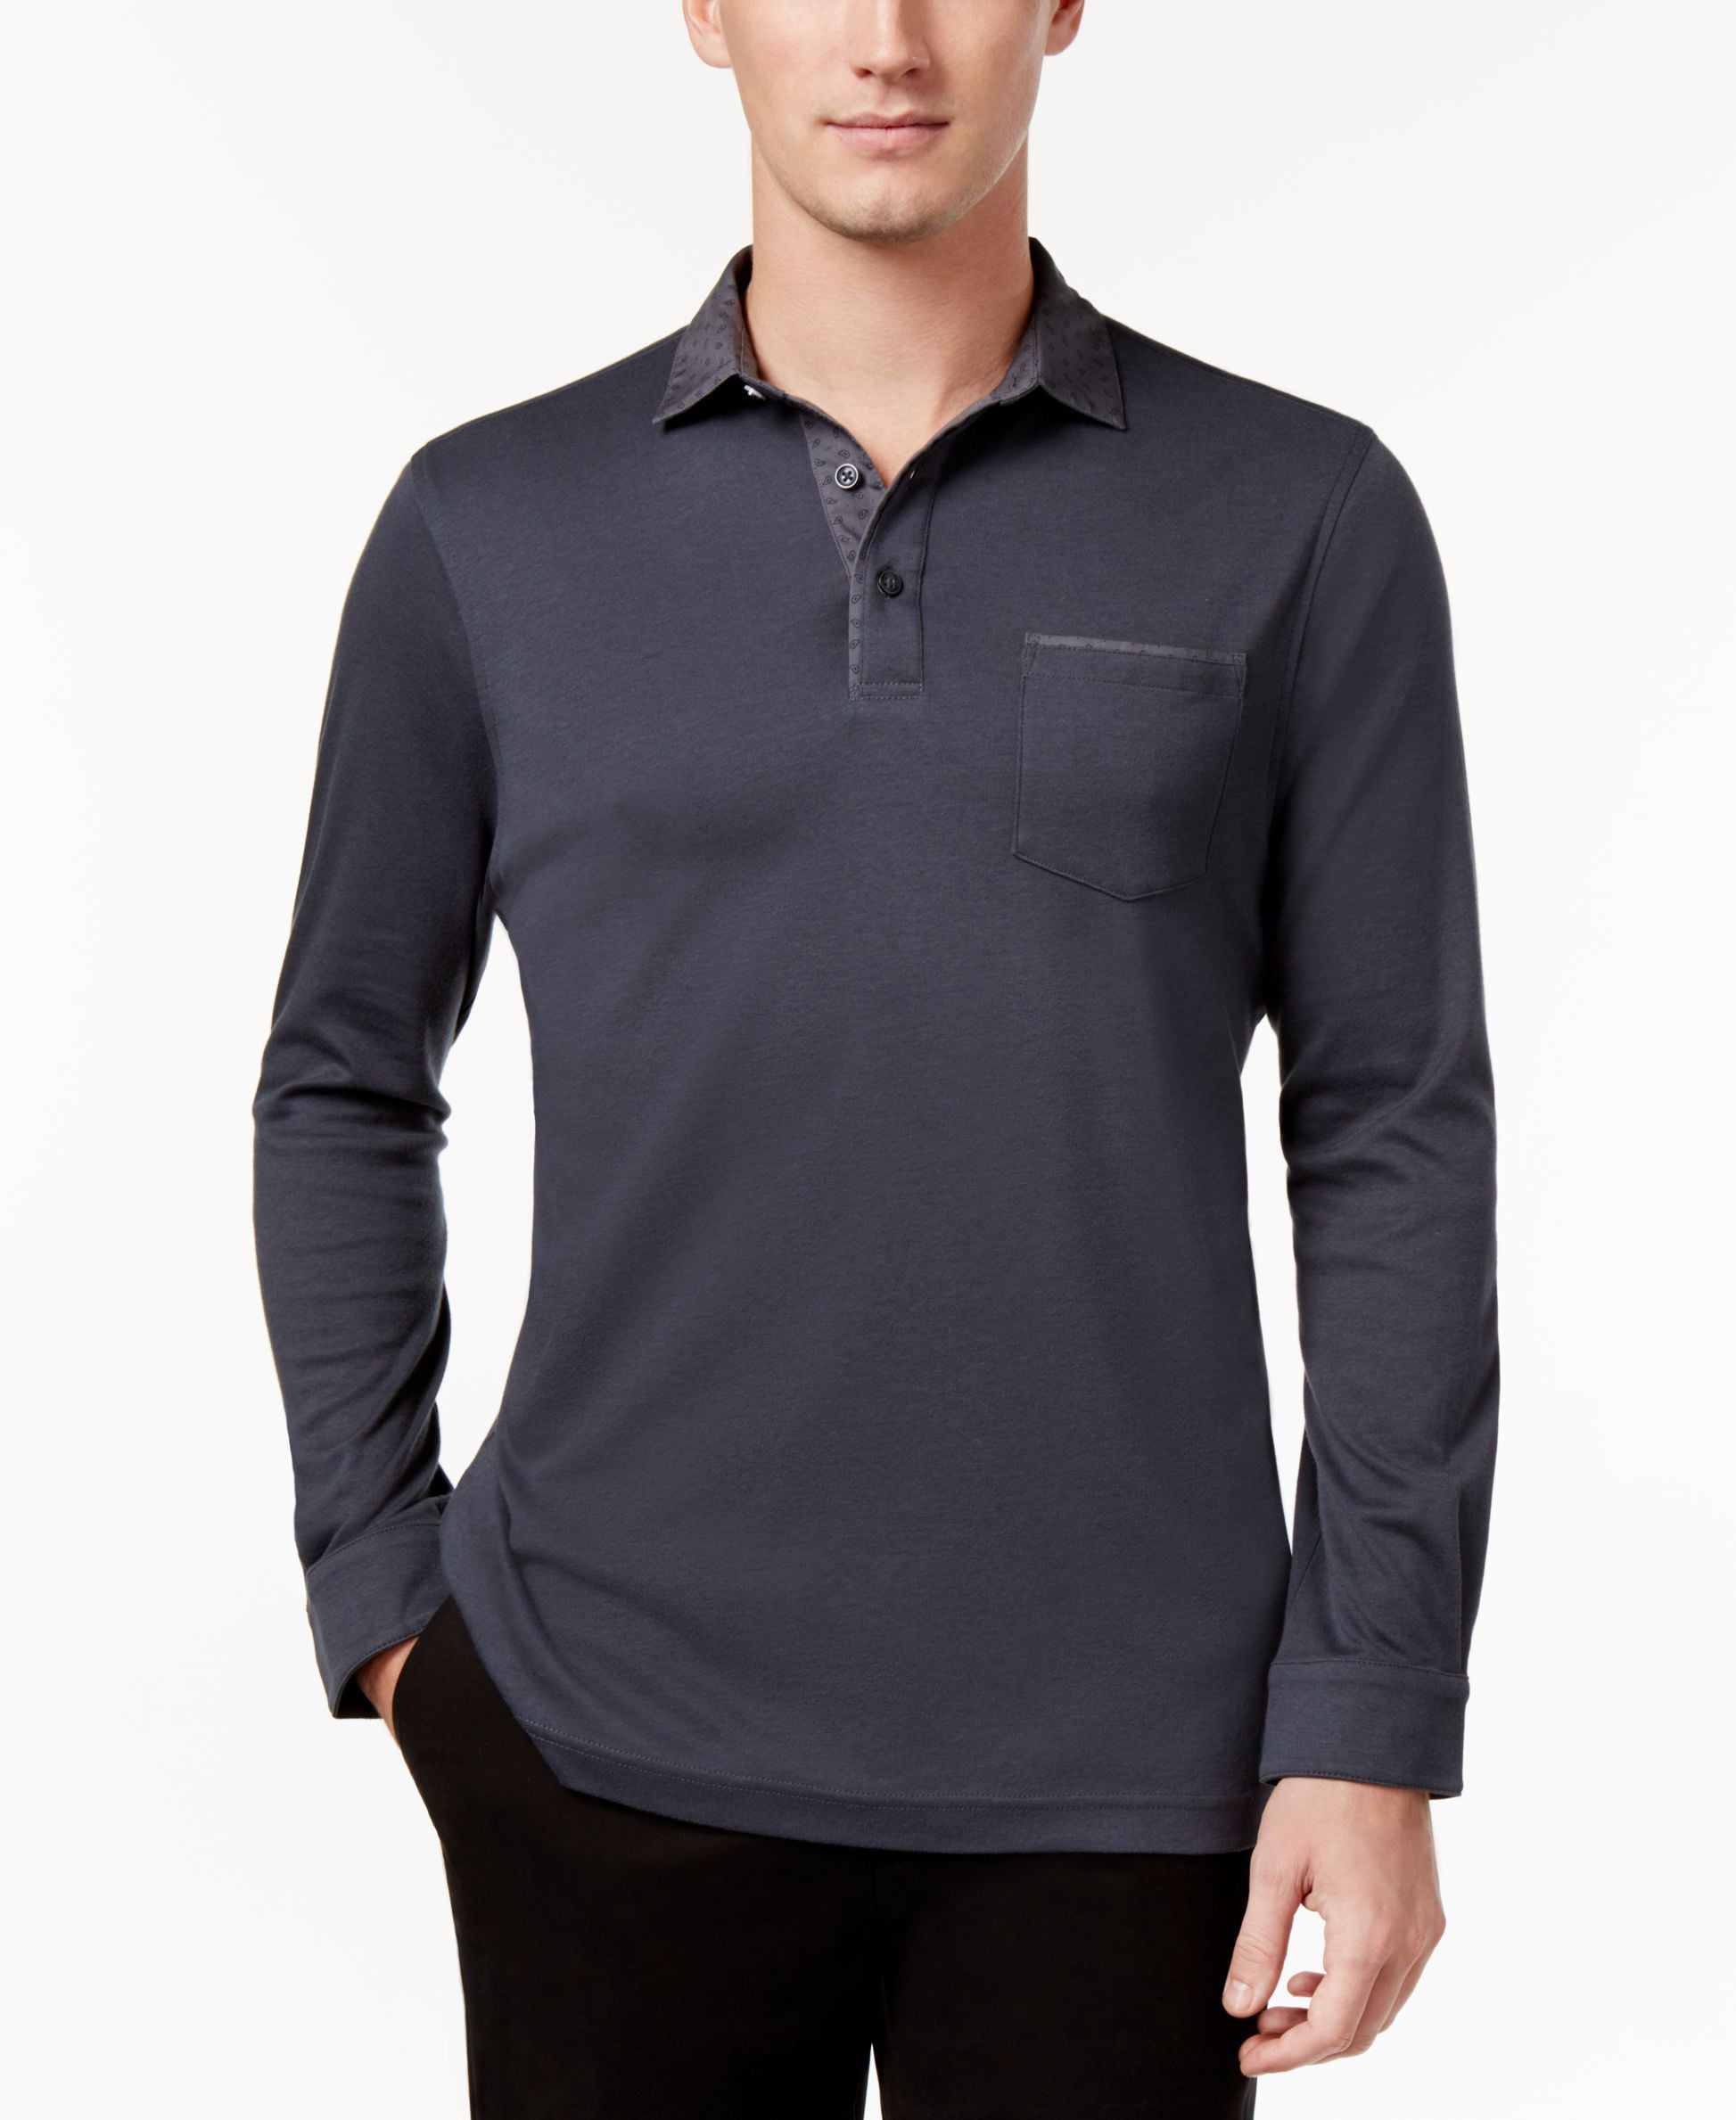 Tasso Elba Mens Shirt Blue Size 2XL Long Sleeve Polo Stretch Knit $59 #152